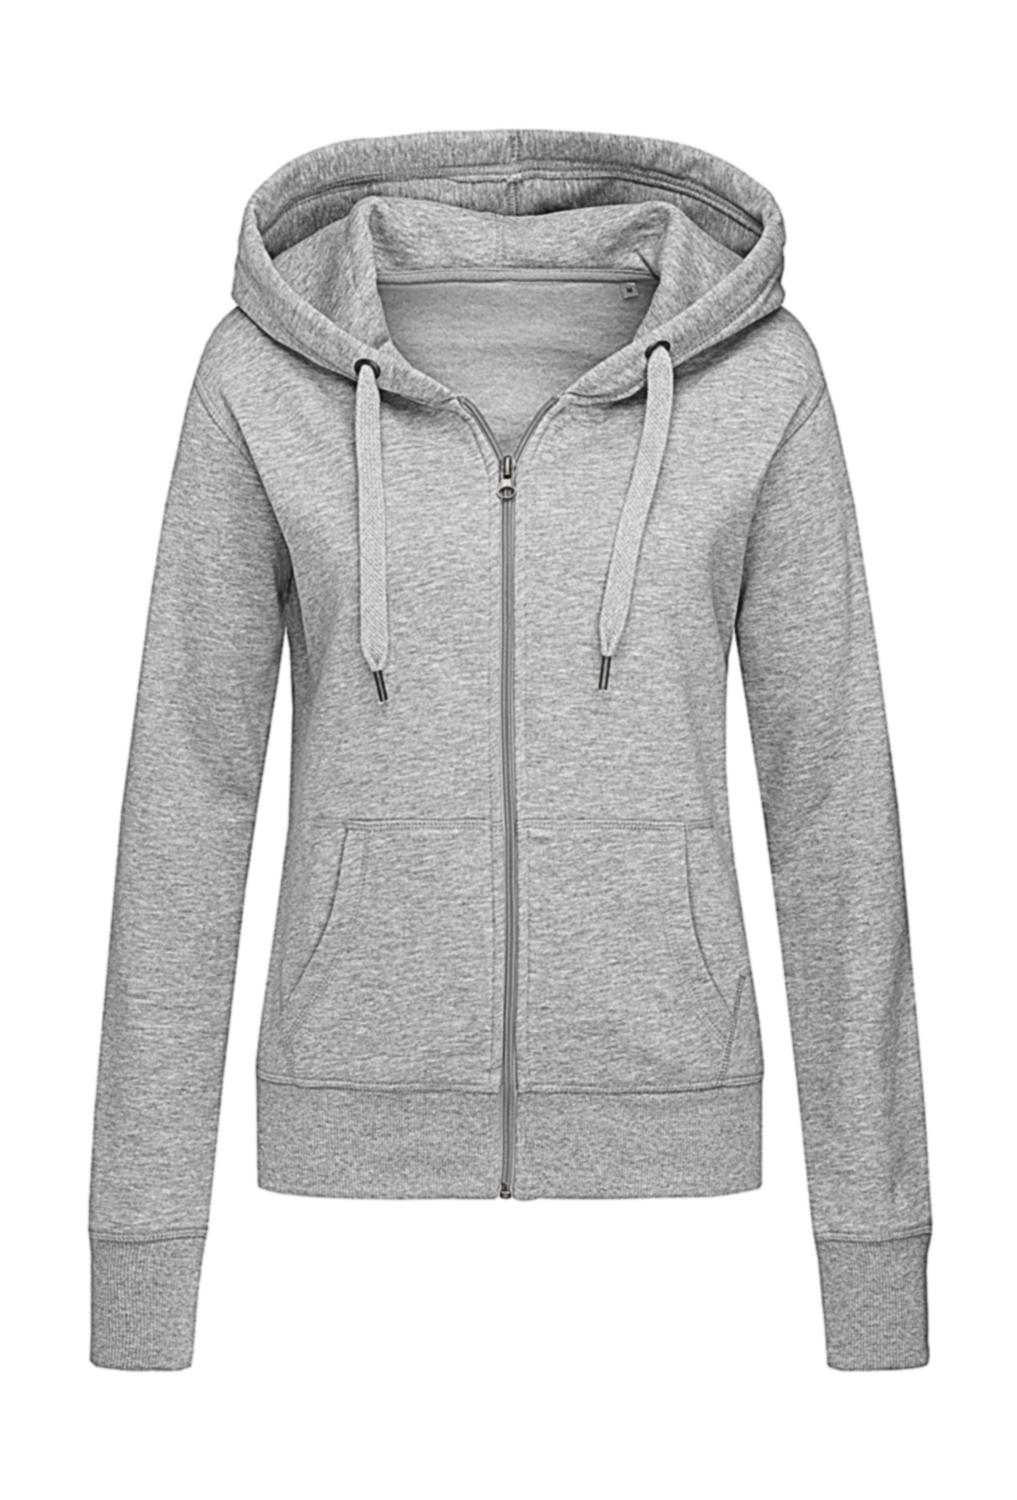 Sweat Jacket Select Women - grey heather